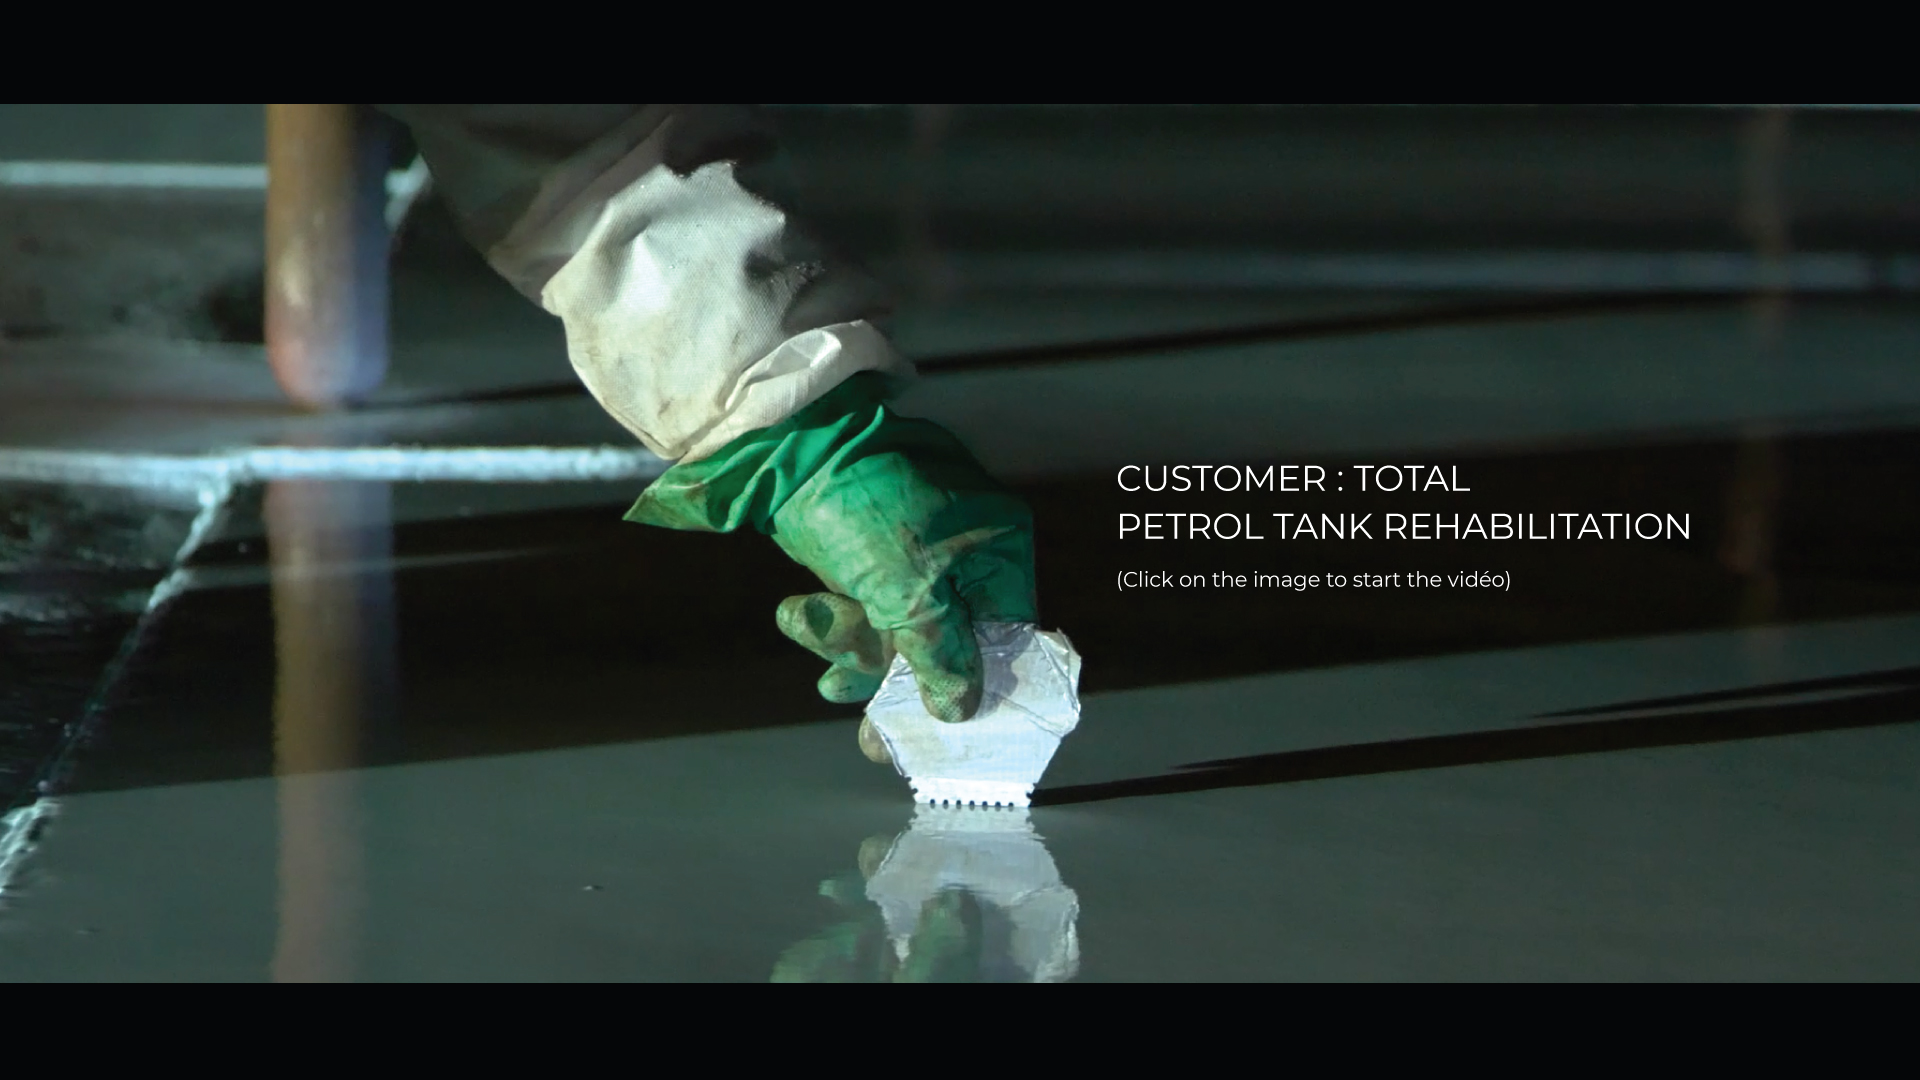 petrol tank rehabilitation for TOTAL